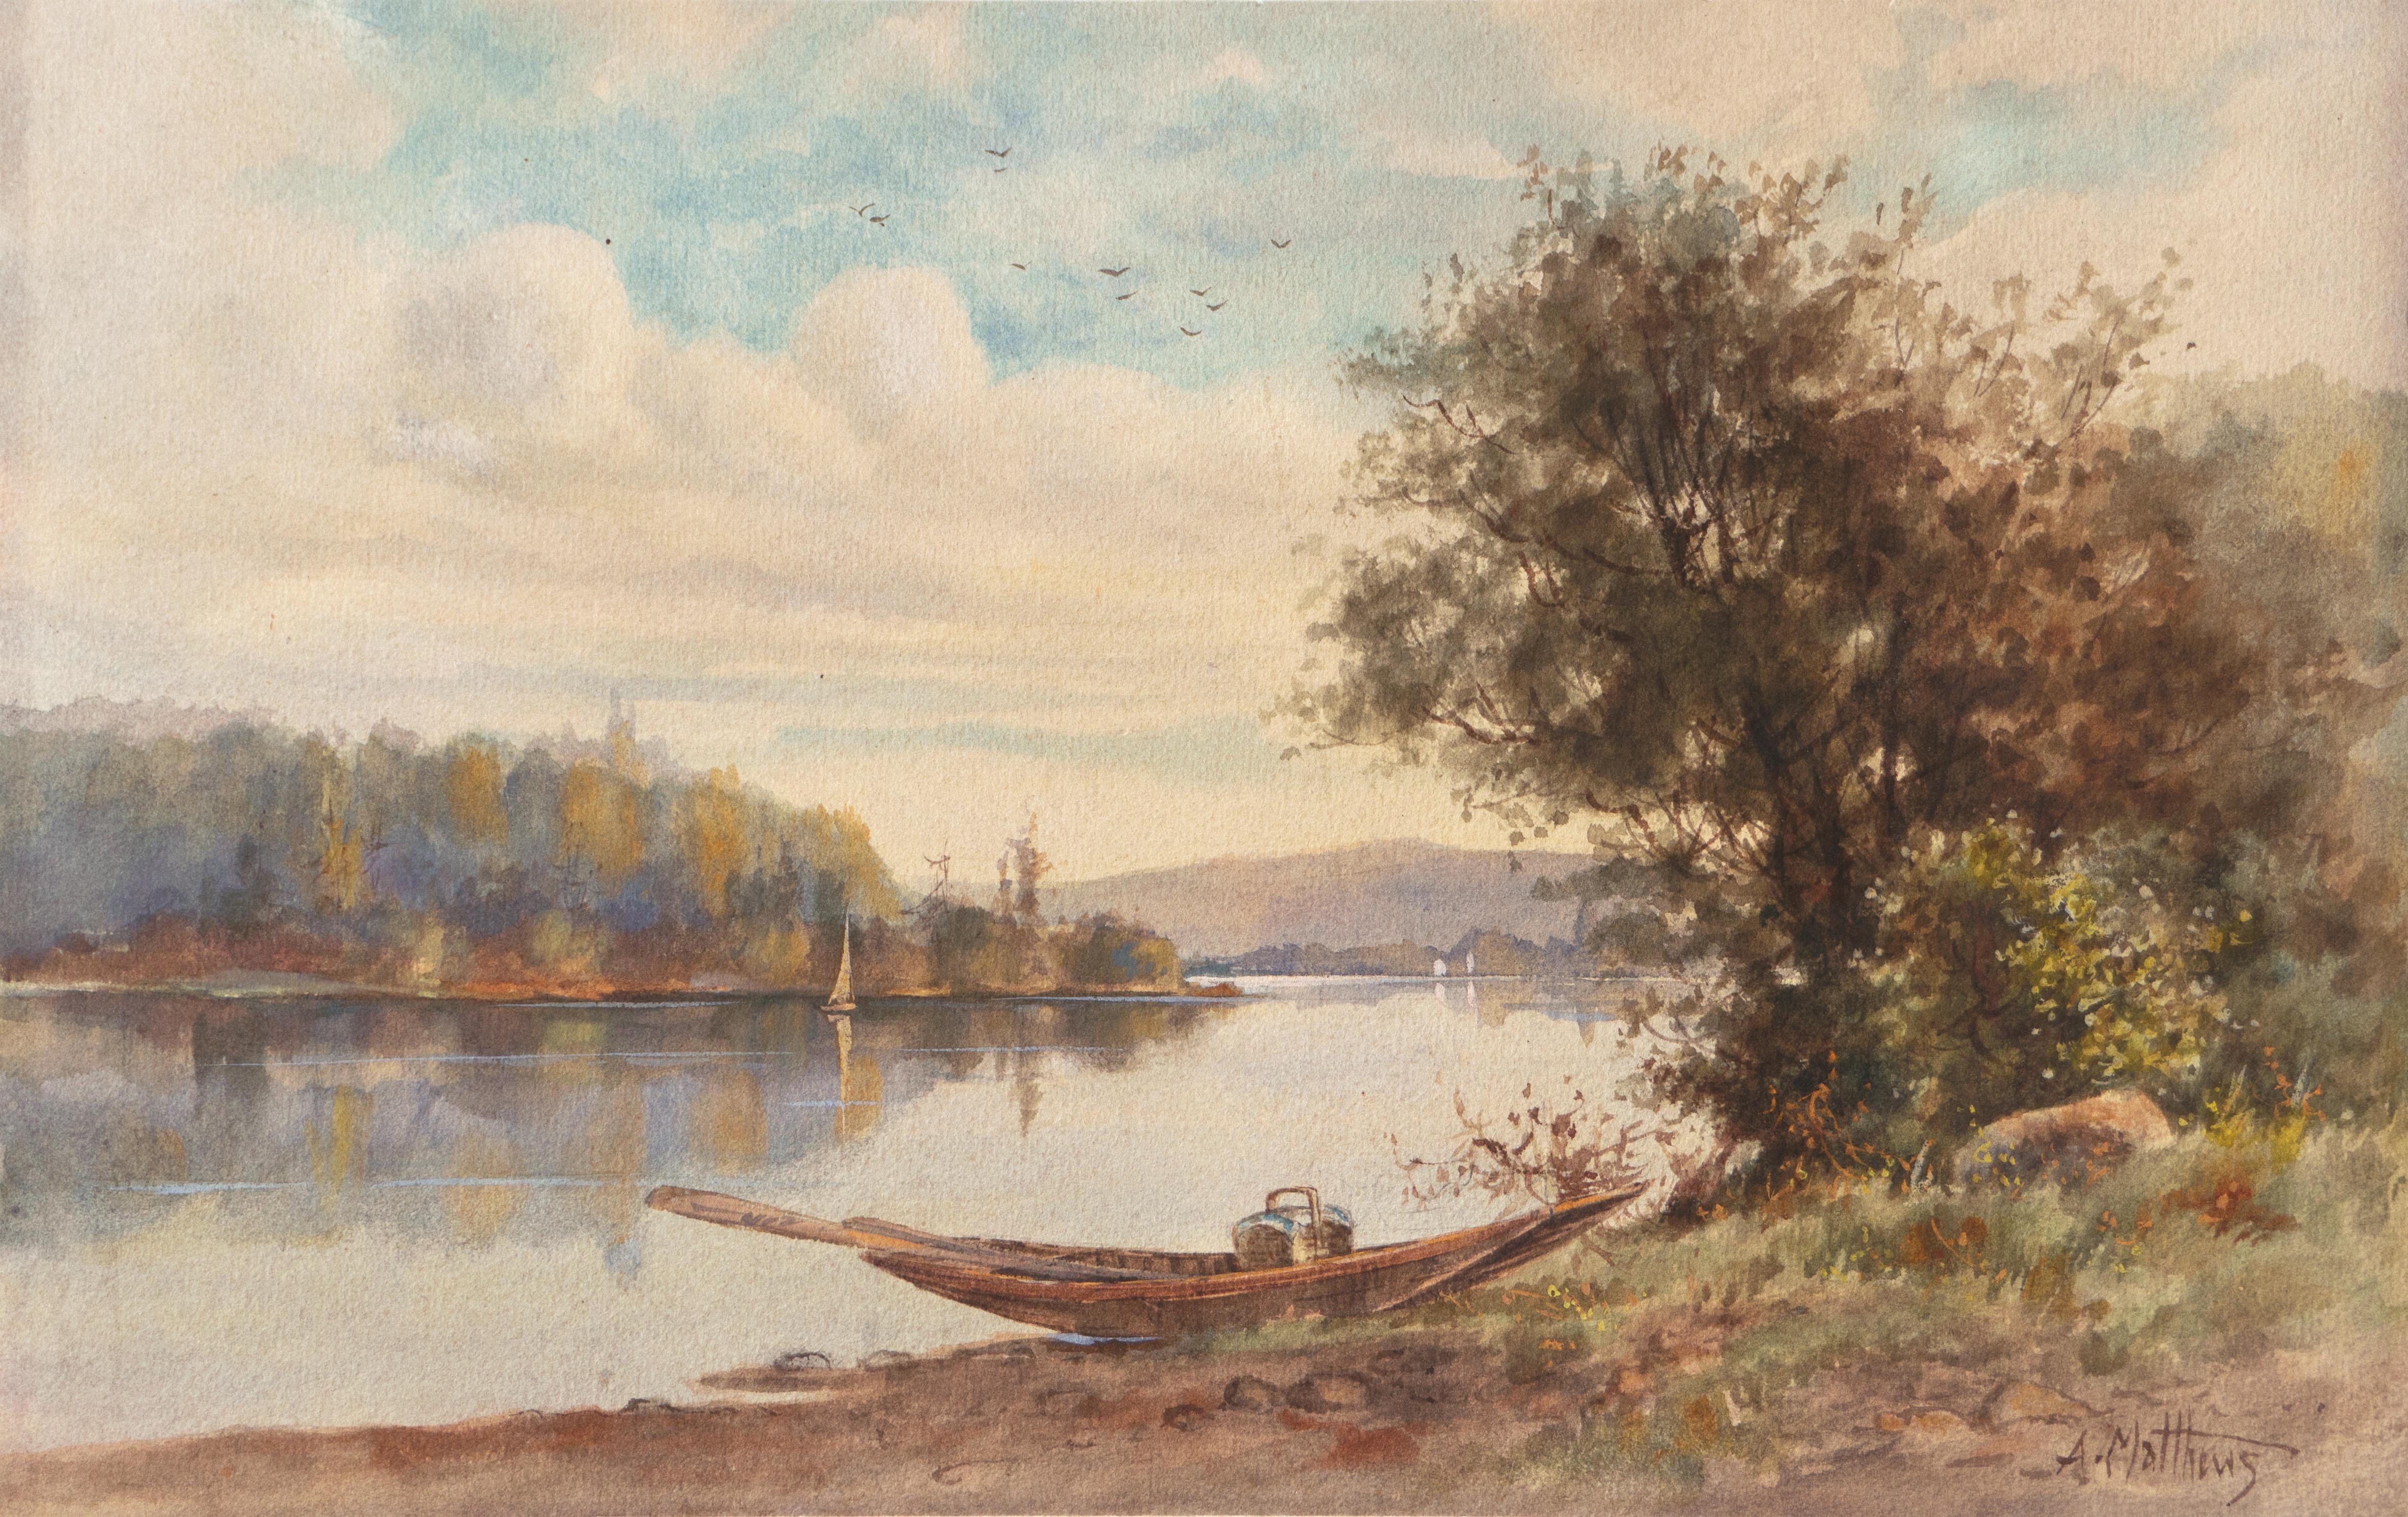 Albert Matthews Landscape Art - 'A Picnic by the River', Early California Watercolorist